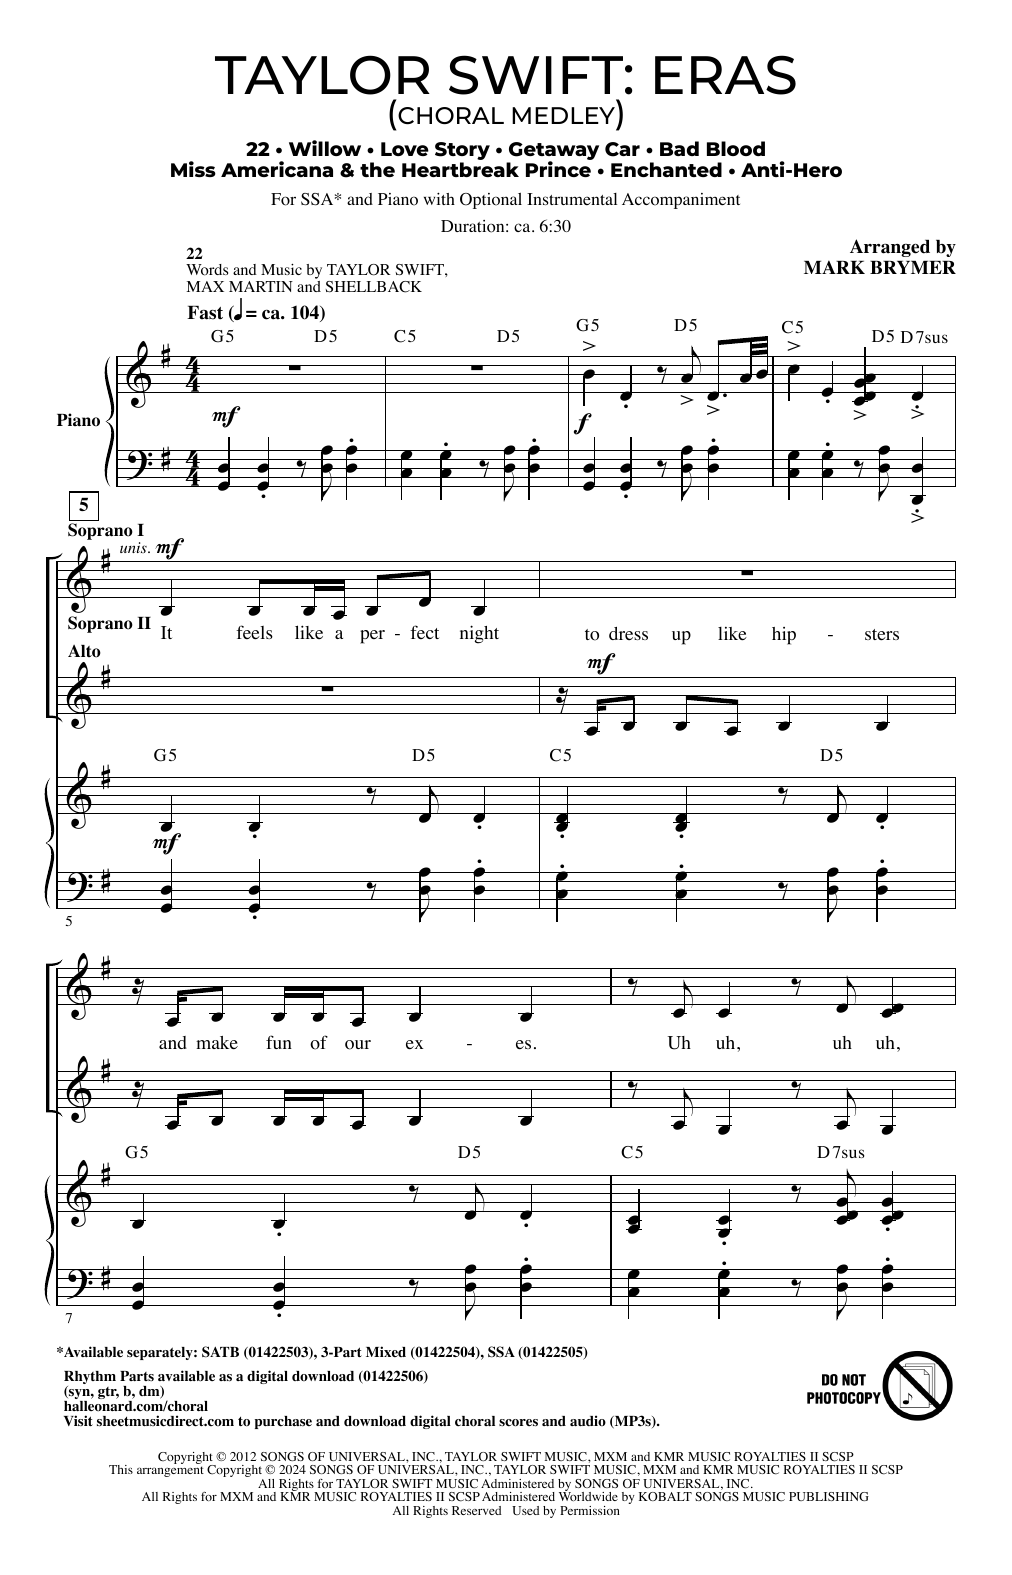 Taylor Swift Taylor Swift: Eras (Choral Medley) (arr. Mark Brymer) Sheet Music Notes & Chords for SATB Choir - Download or Print PDF